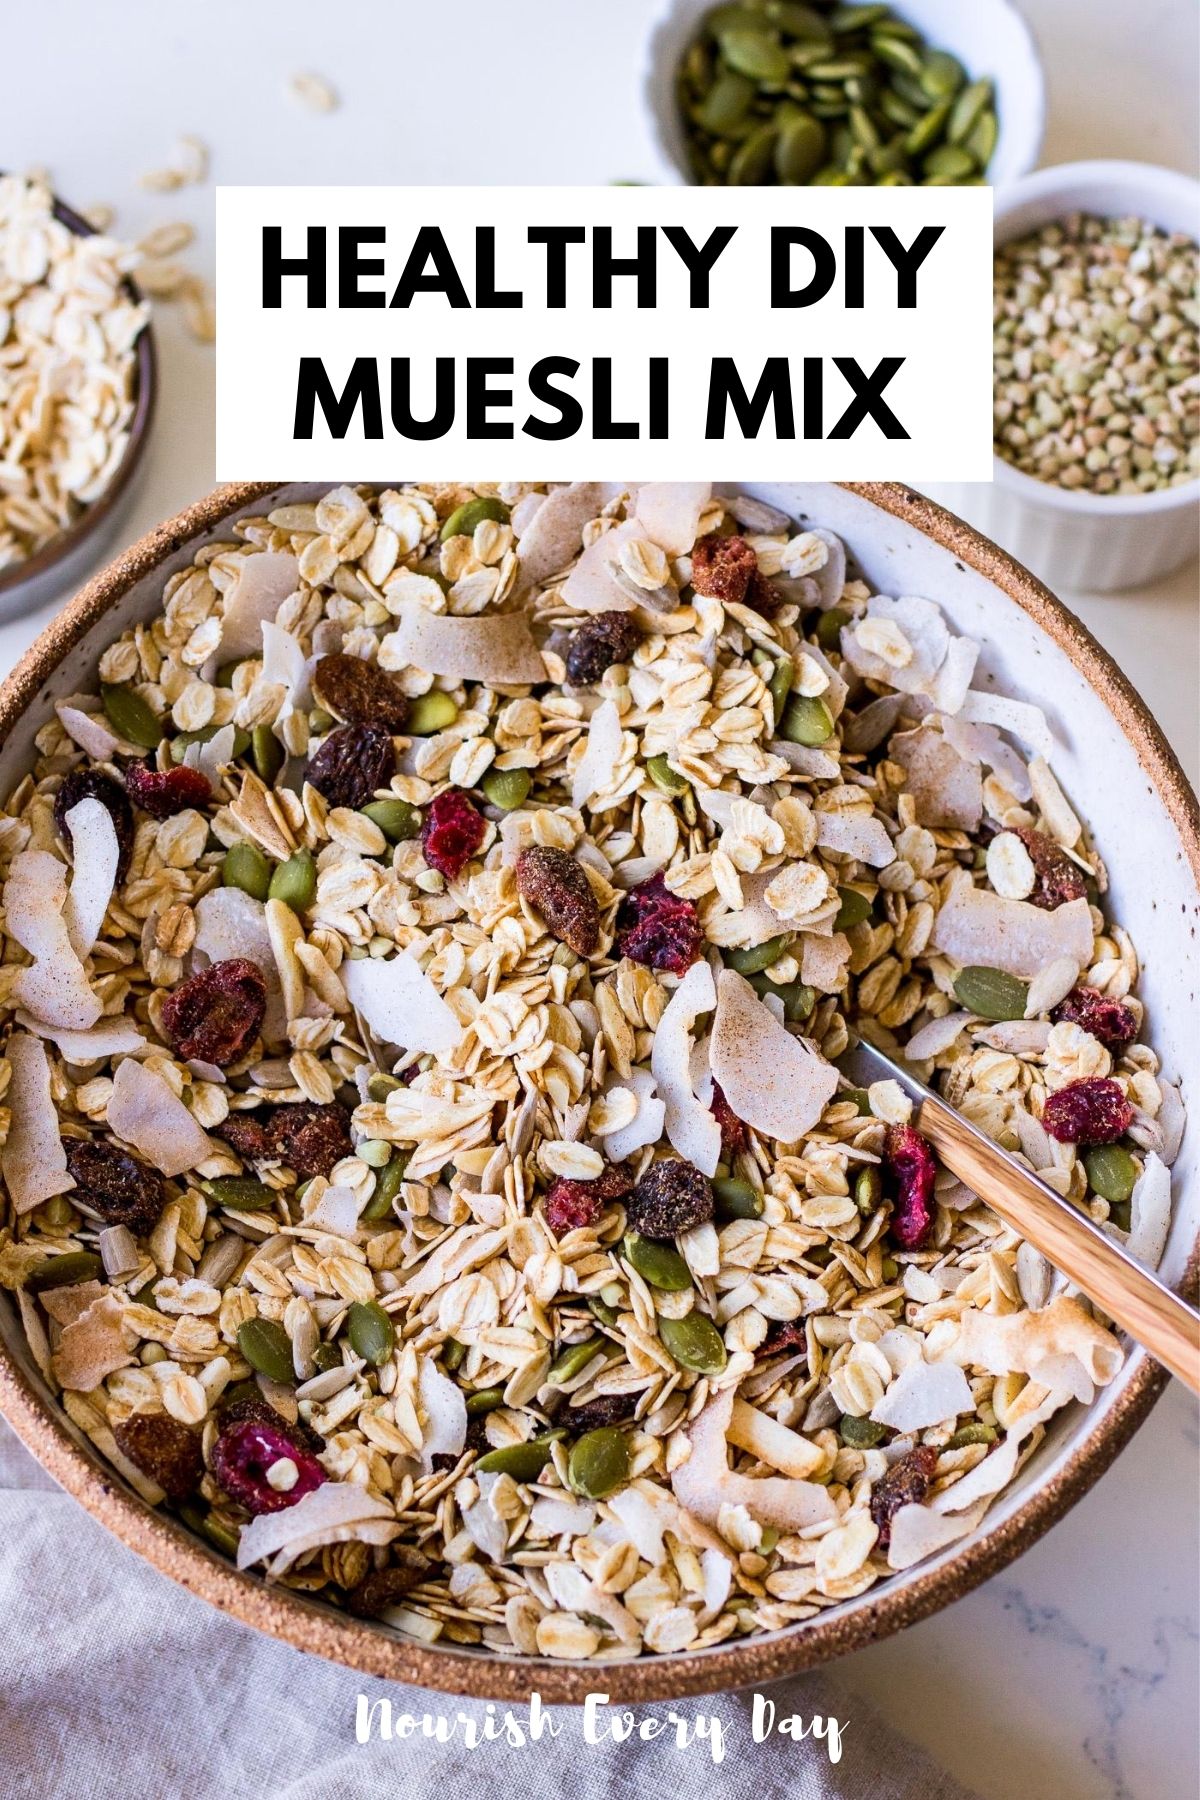 Healthy Homemade Muesli Recipe Image by Nourish Every Day